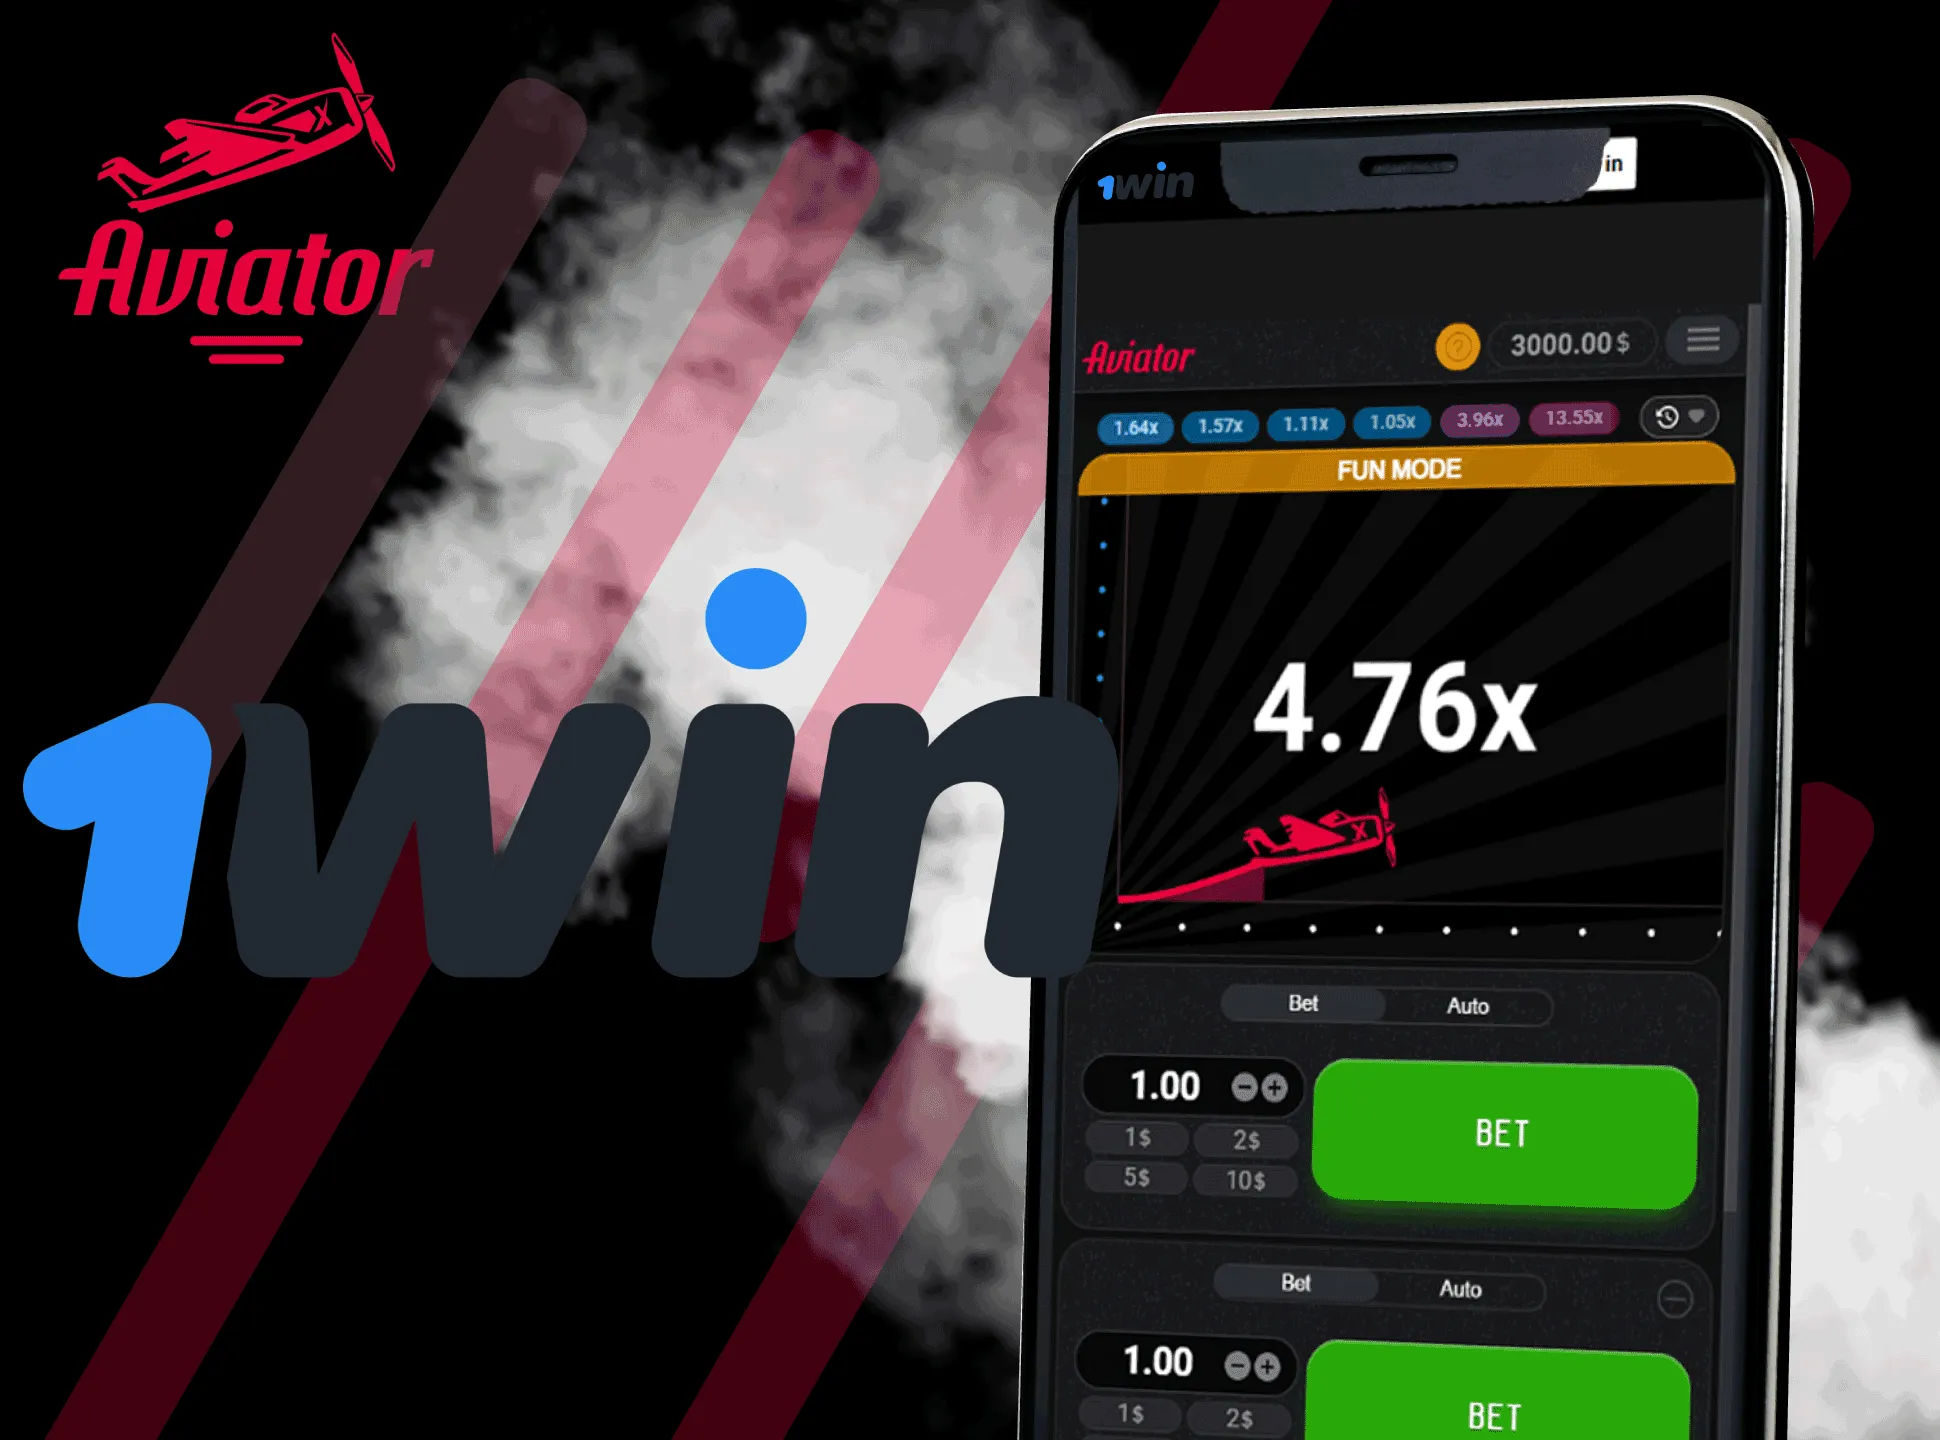 Get a 100$ bonus to play Aviator in the 1win app.